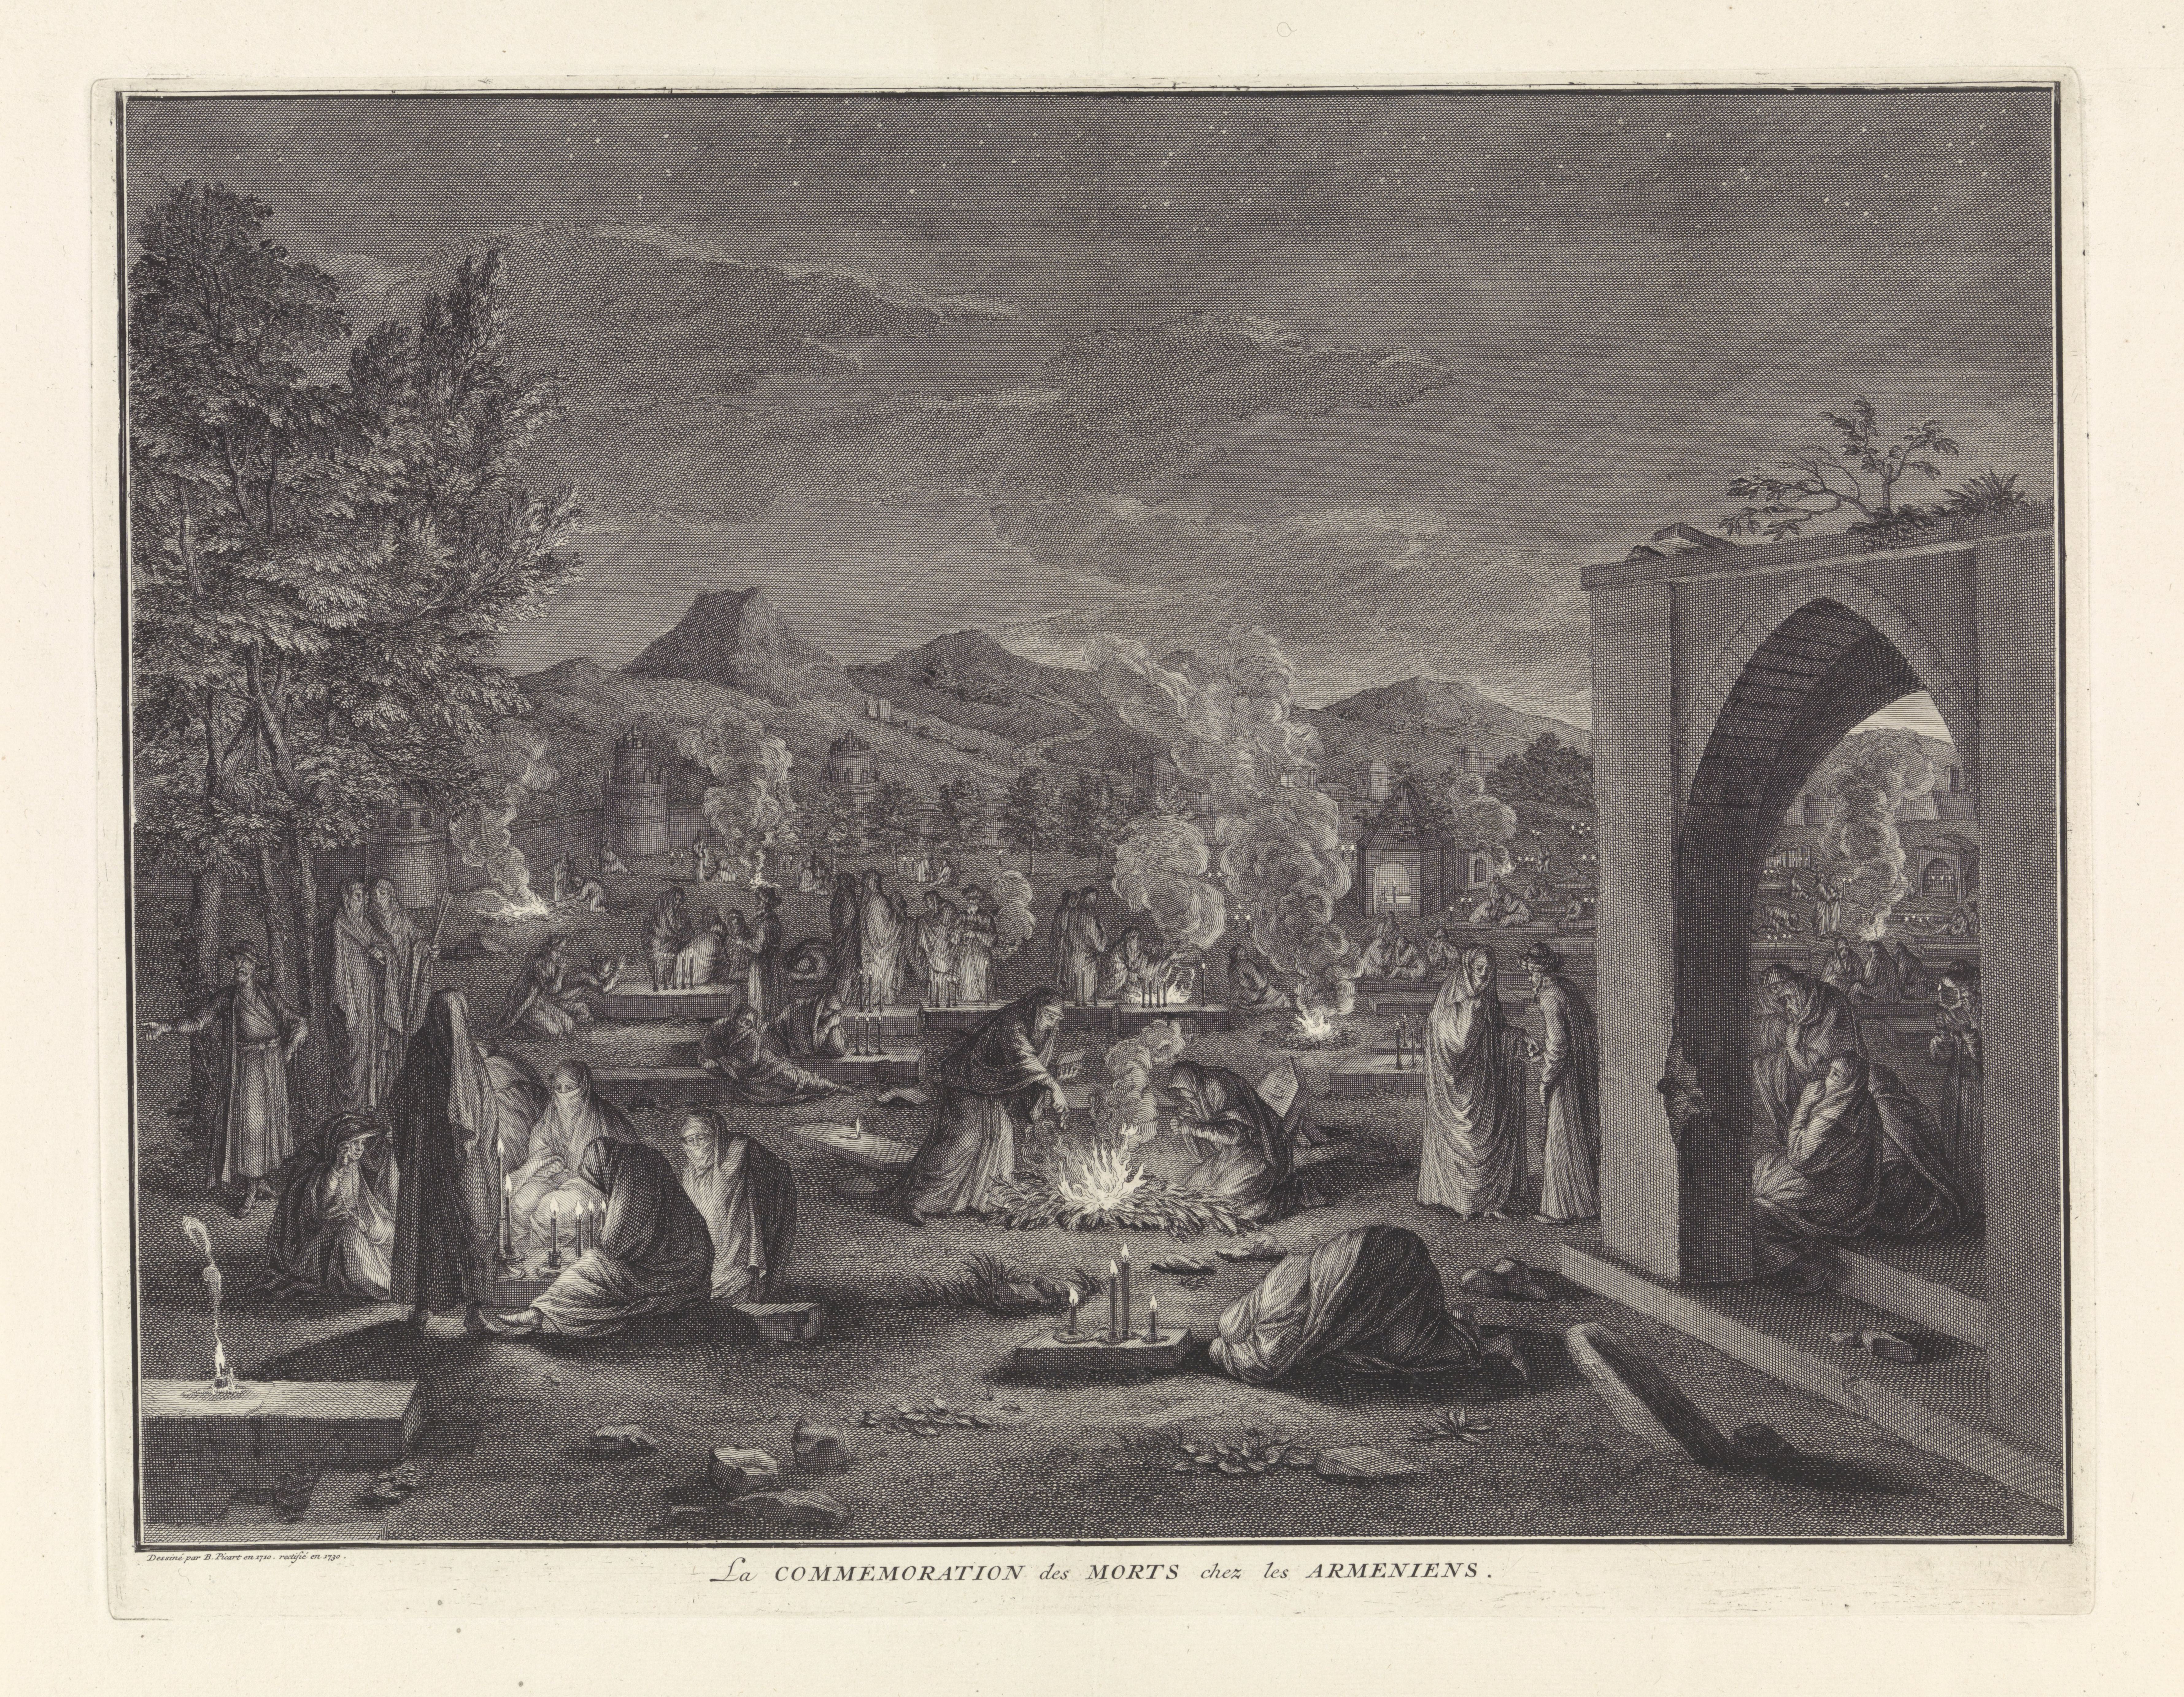 Remembrance Day of the dead by Armenian Christians, Bernard Picart (studio), Bernard Picart, 1710-1730